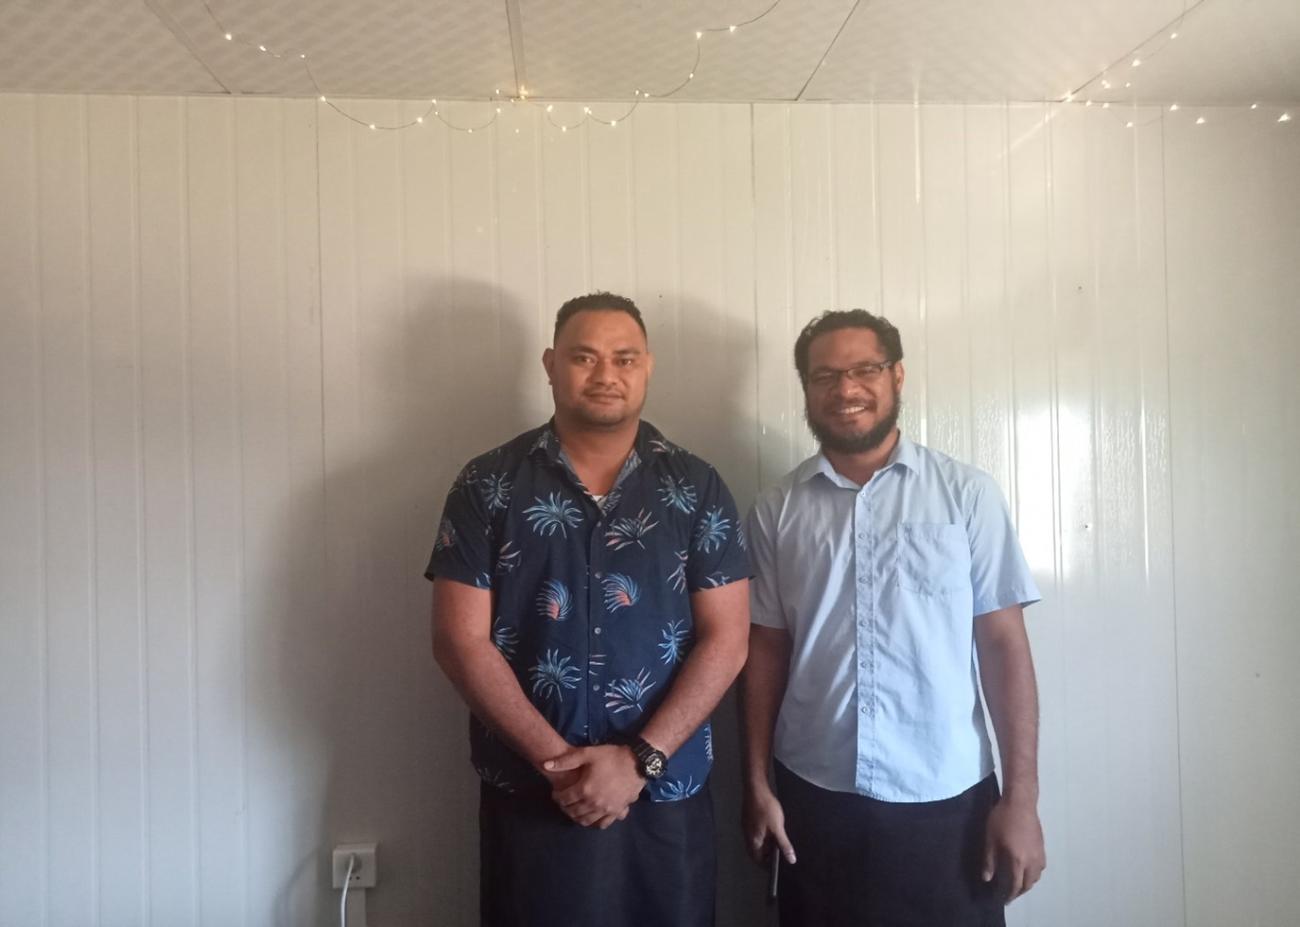 Mr. Sosefo Tofu from PCREEE and Mr. Simona Kilei, Director for Energy in Tuvalu